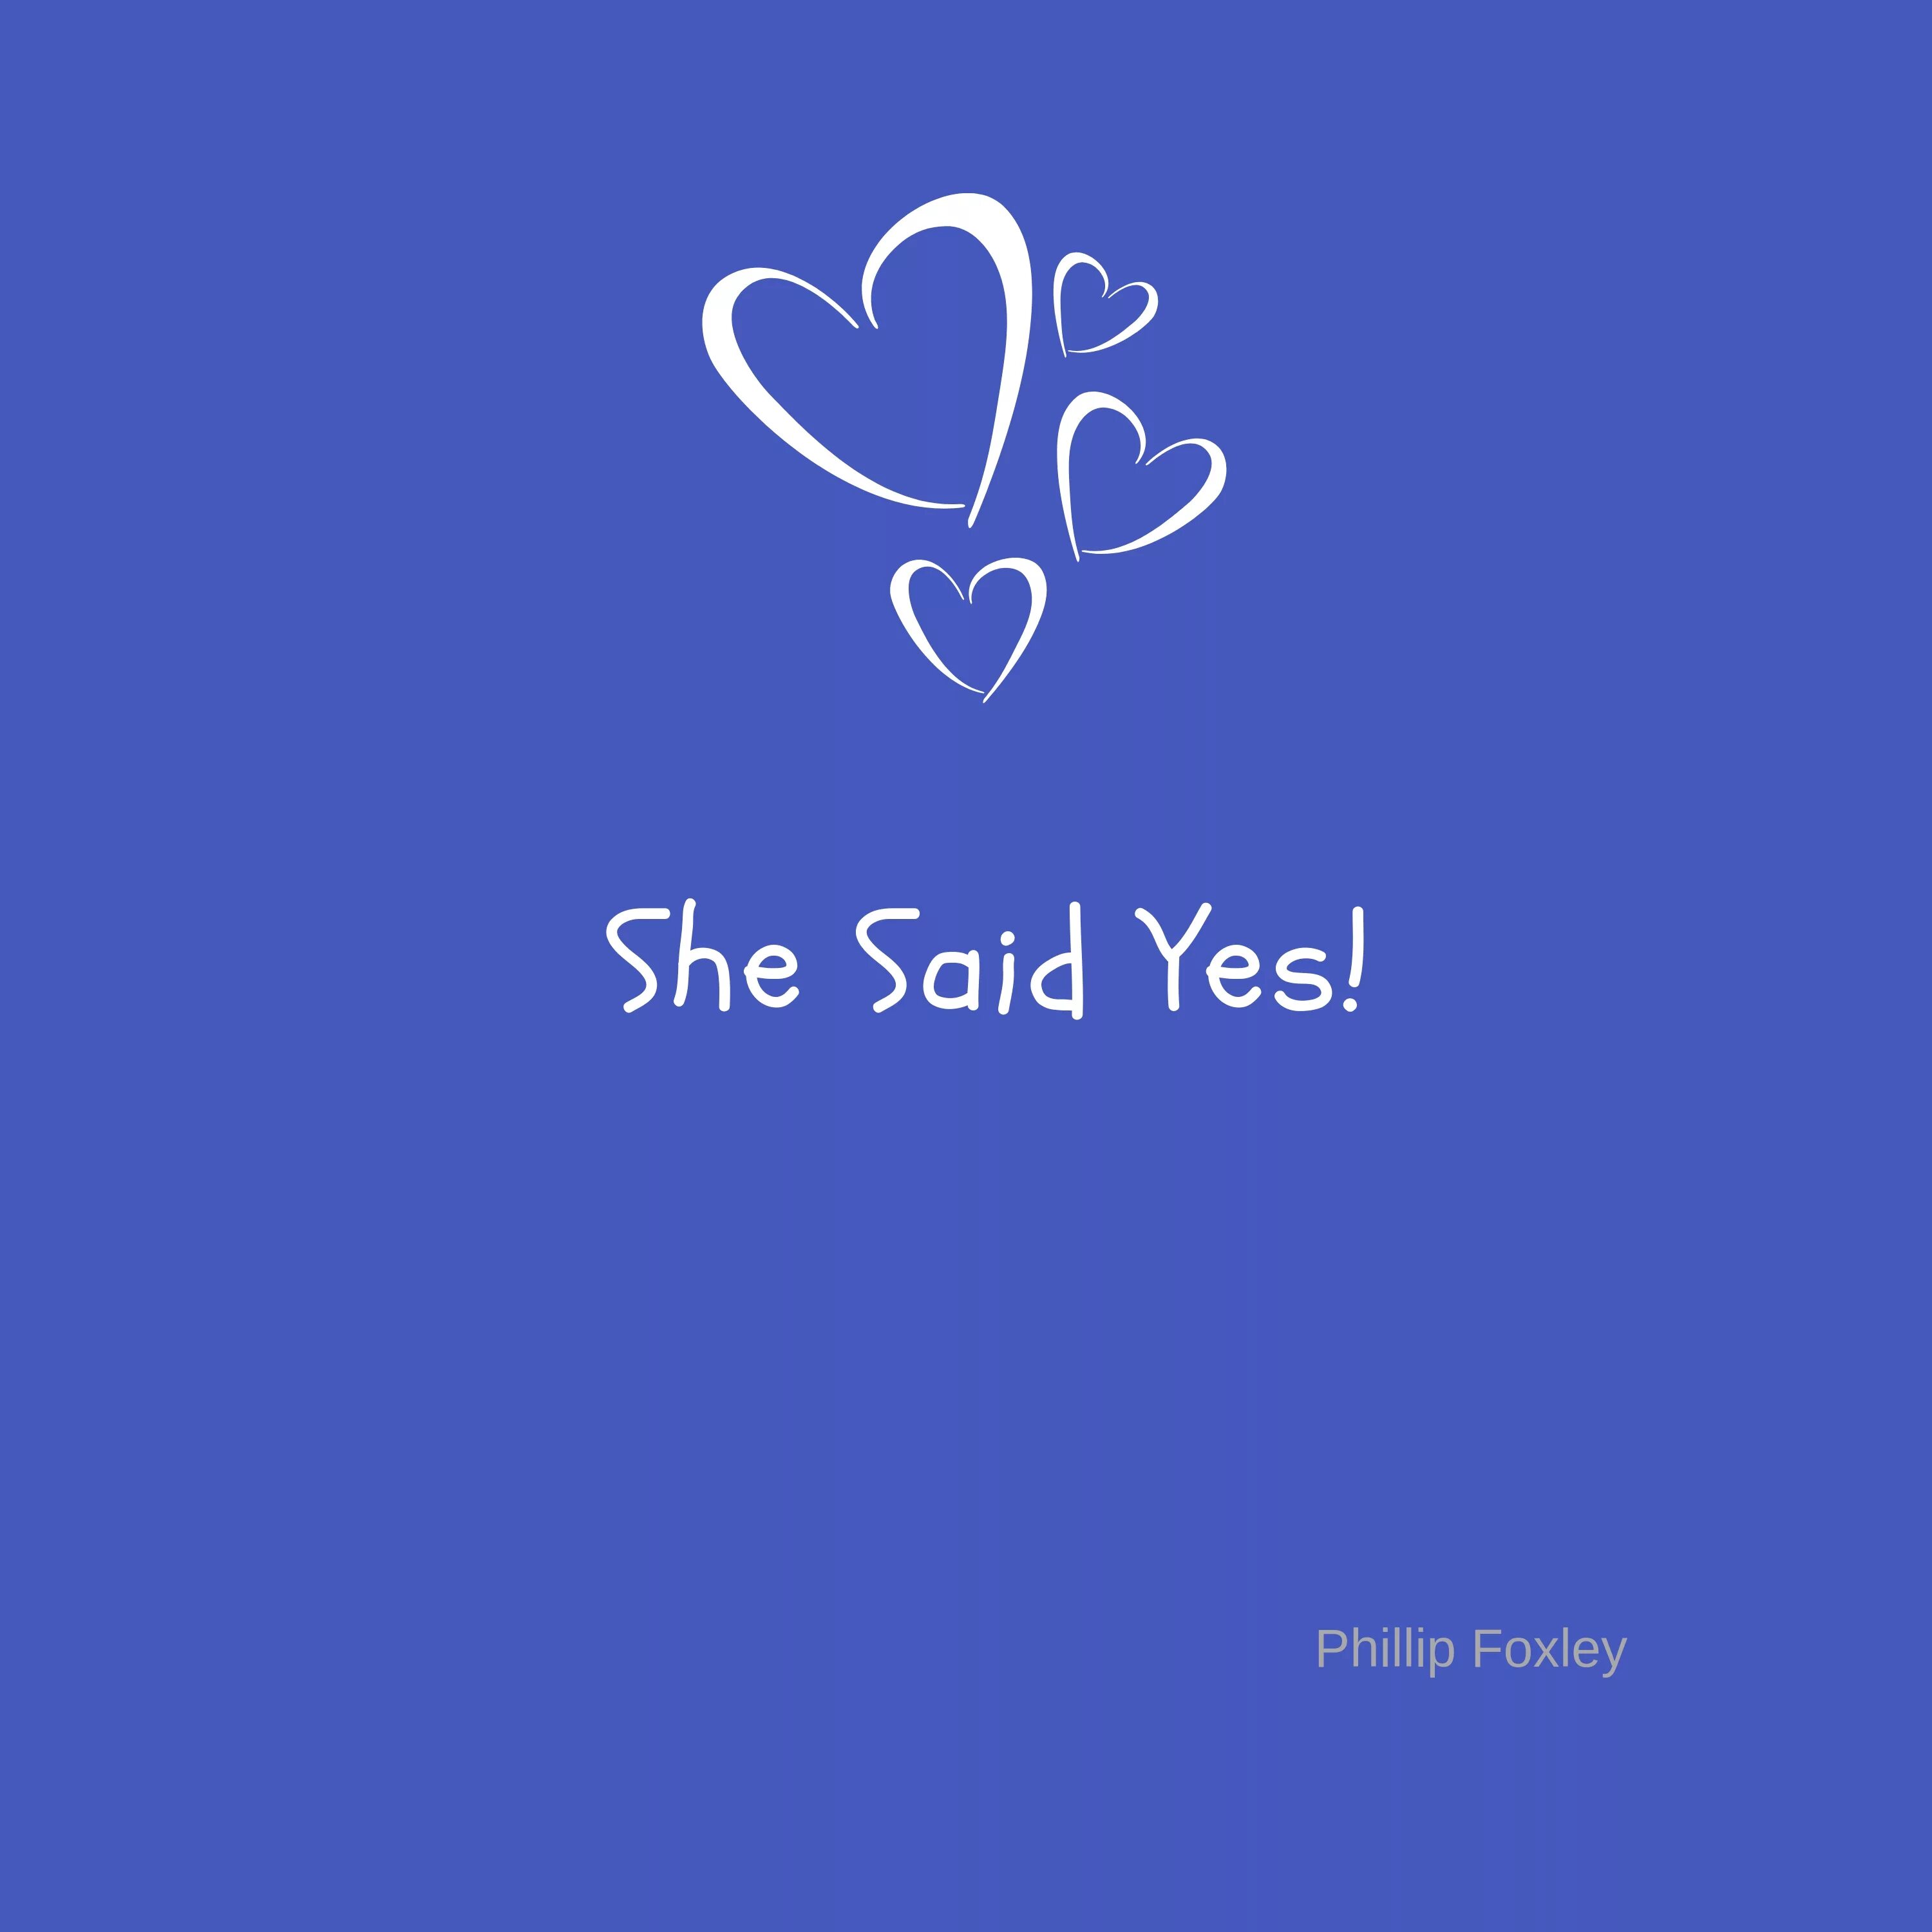 She said Yes. She said Yes картинка. Логотип i said Yes. Тиффани i said Yes.